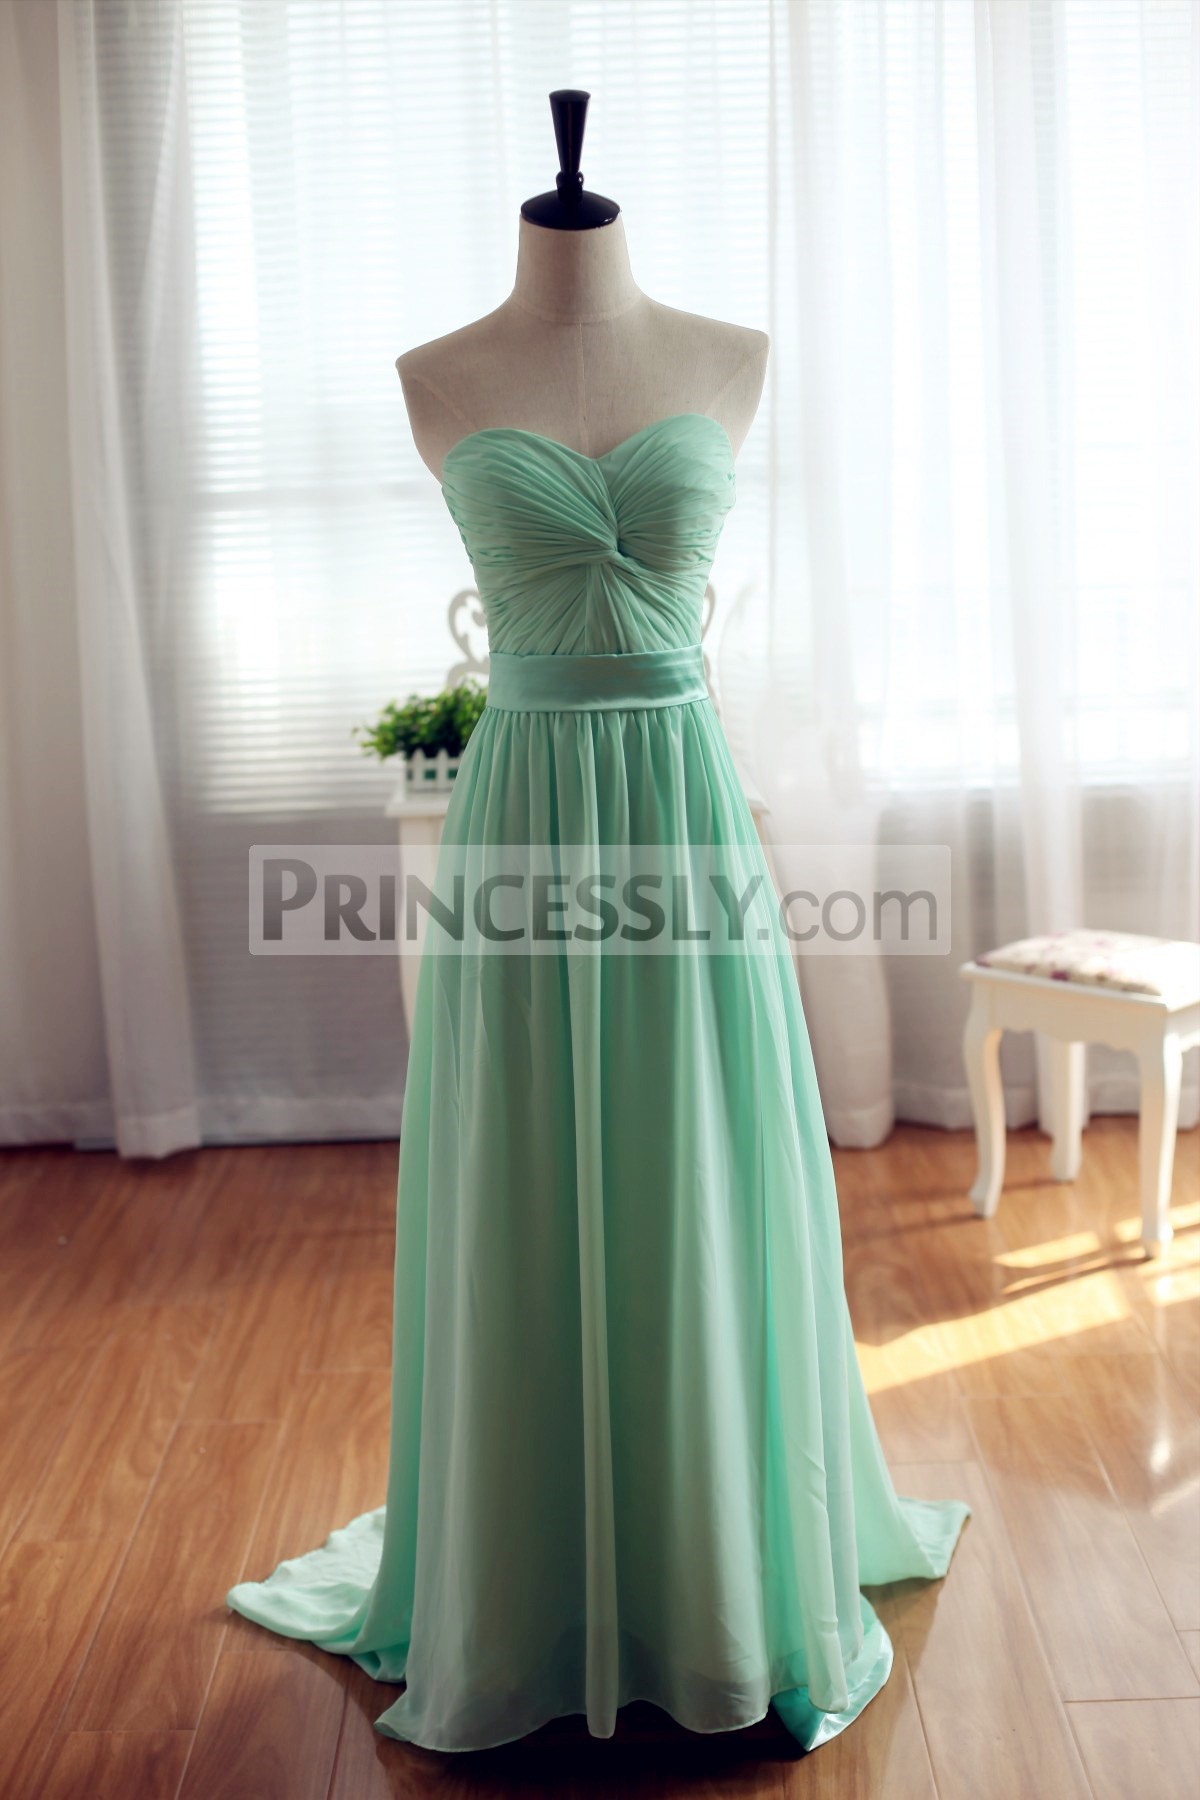 Princessly.com-K1001952-Mint Chiffon Bridesmaid Dress Prom Dress Strapless Sweetheart Dress-31